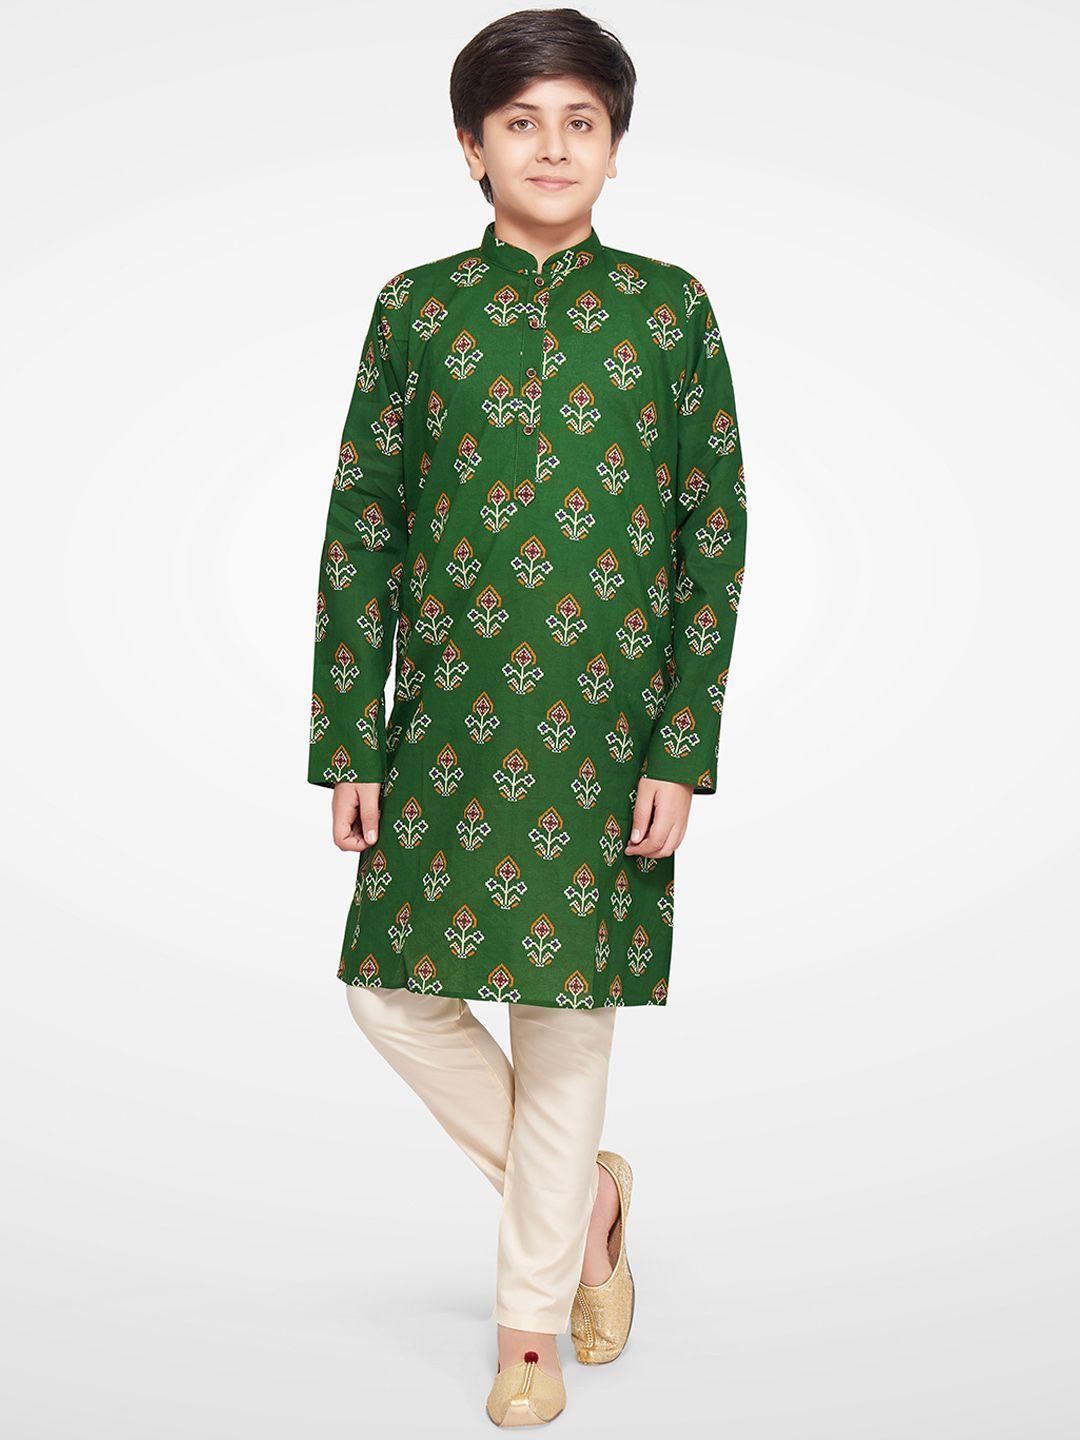 jeetethnics boys green & cream ethnic motifs printed kurta with pyjamas